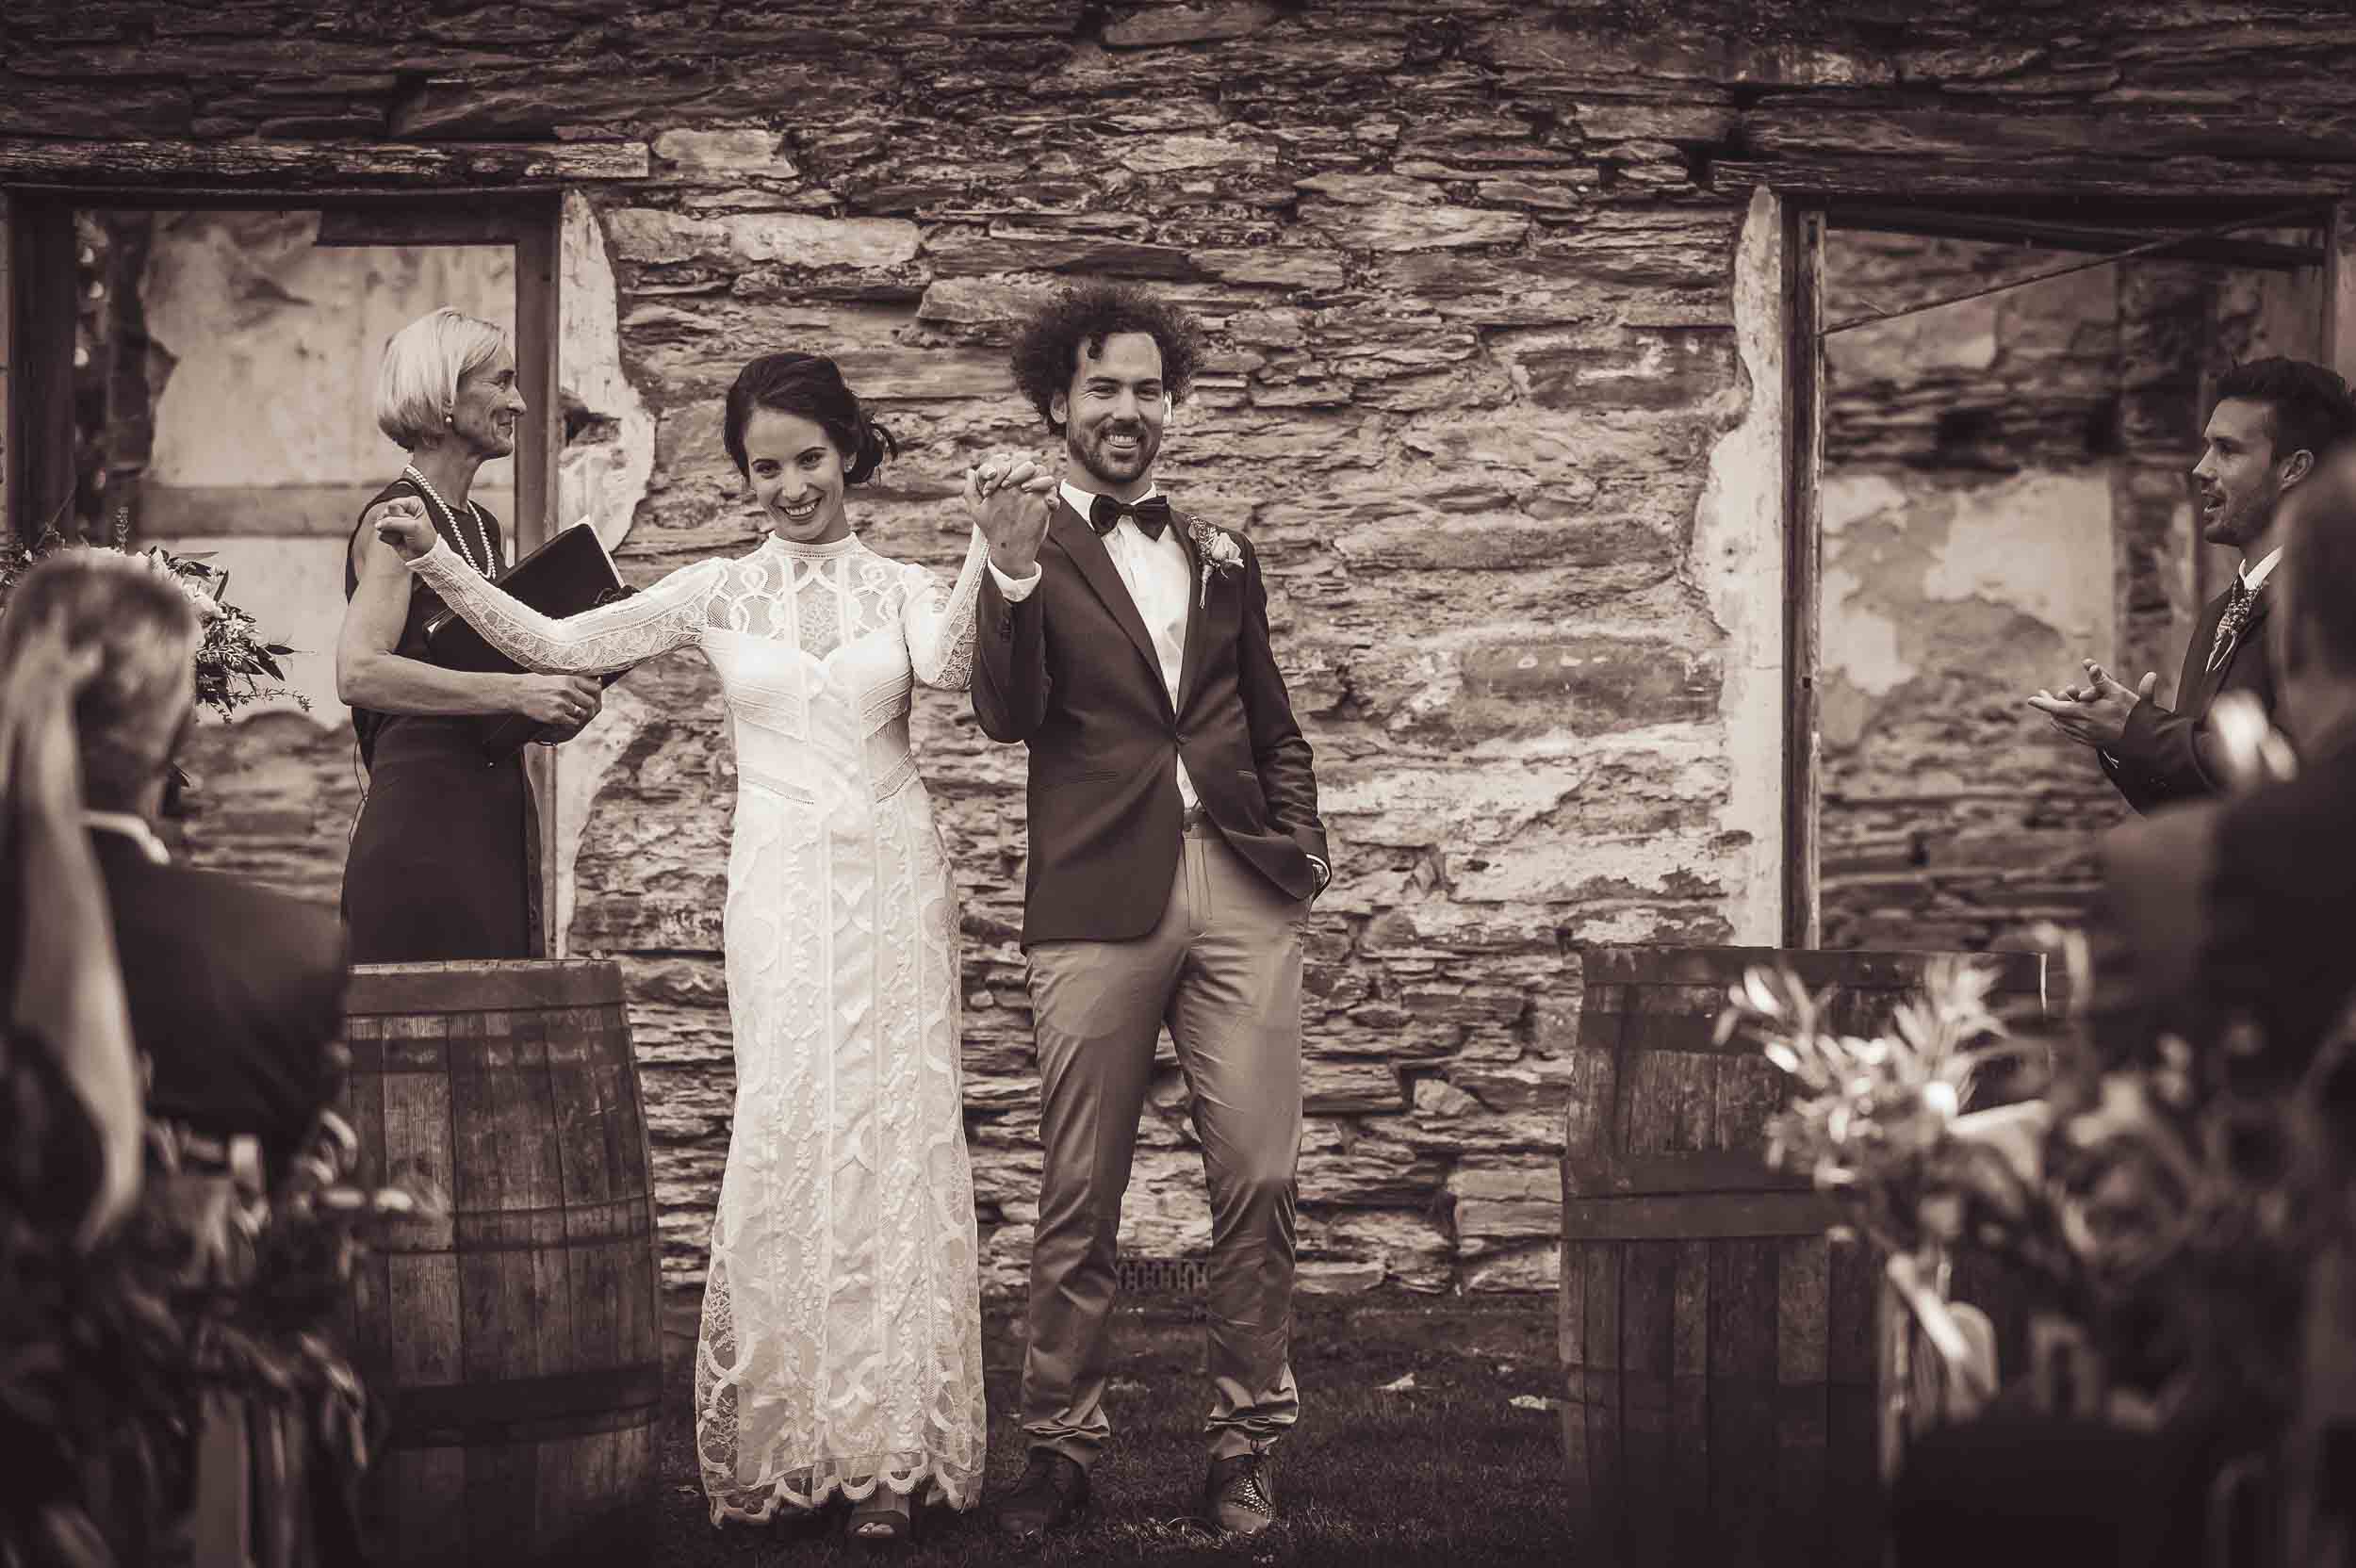 Andrea + Pat | A Stunning Thurlby Domain Wedding fallon photography